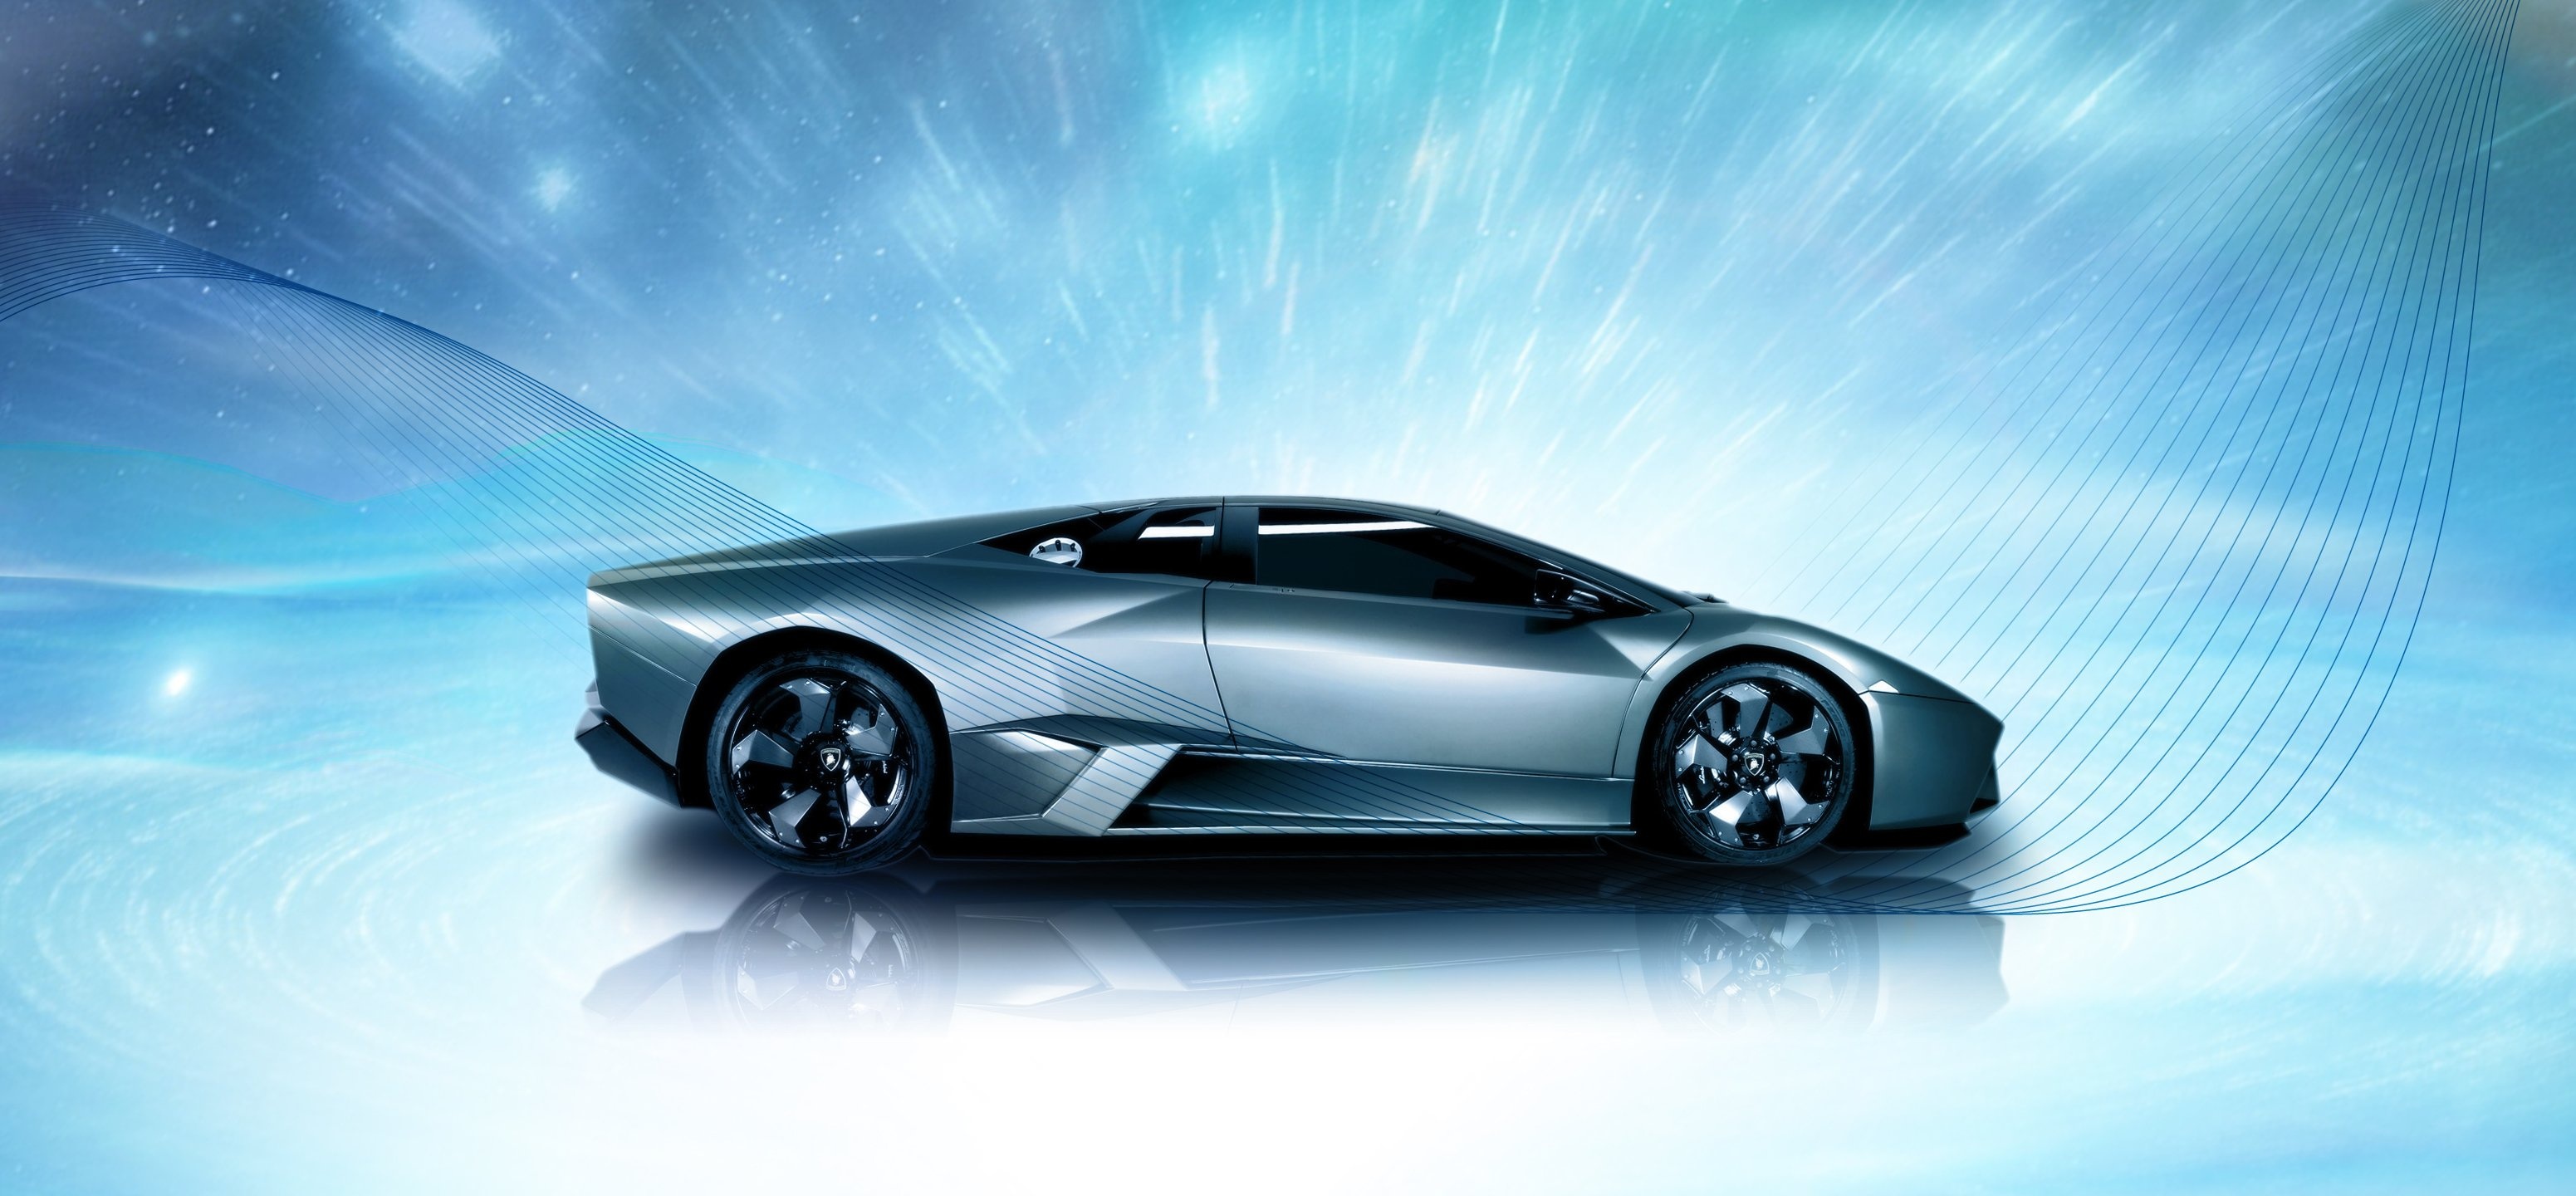 Lamborghini masterpiece, Stunning wallpaper, Striking visuals, Timeless beauty, 3110x1440 Dual Screen Desktop